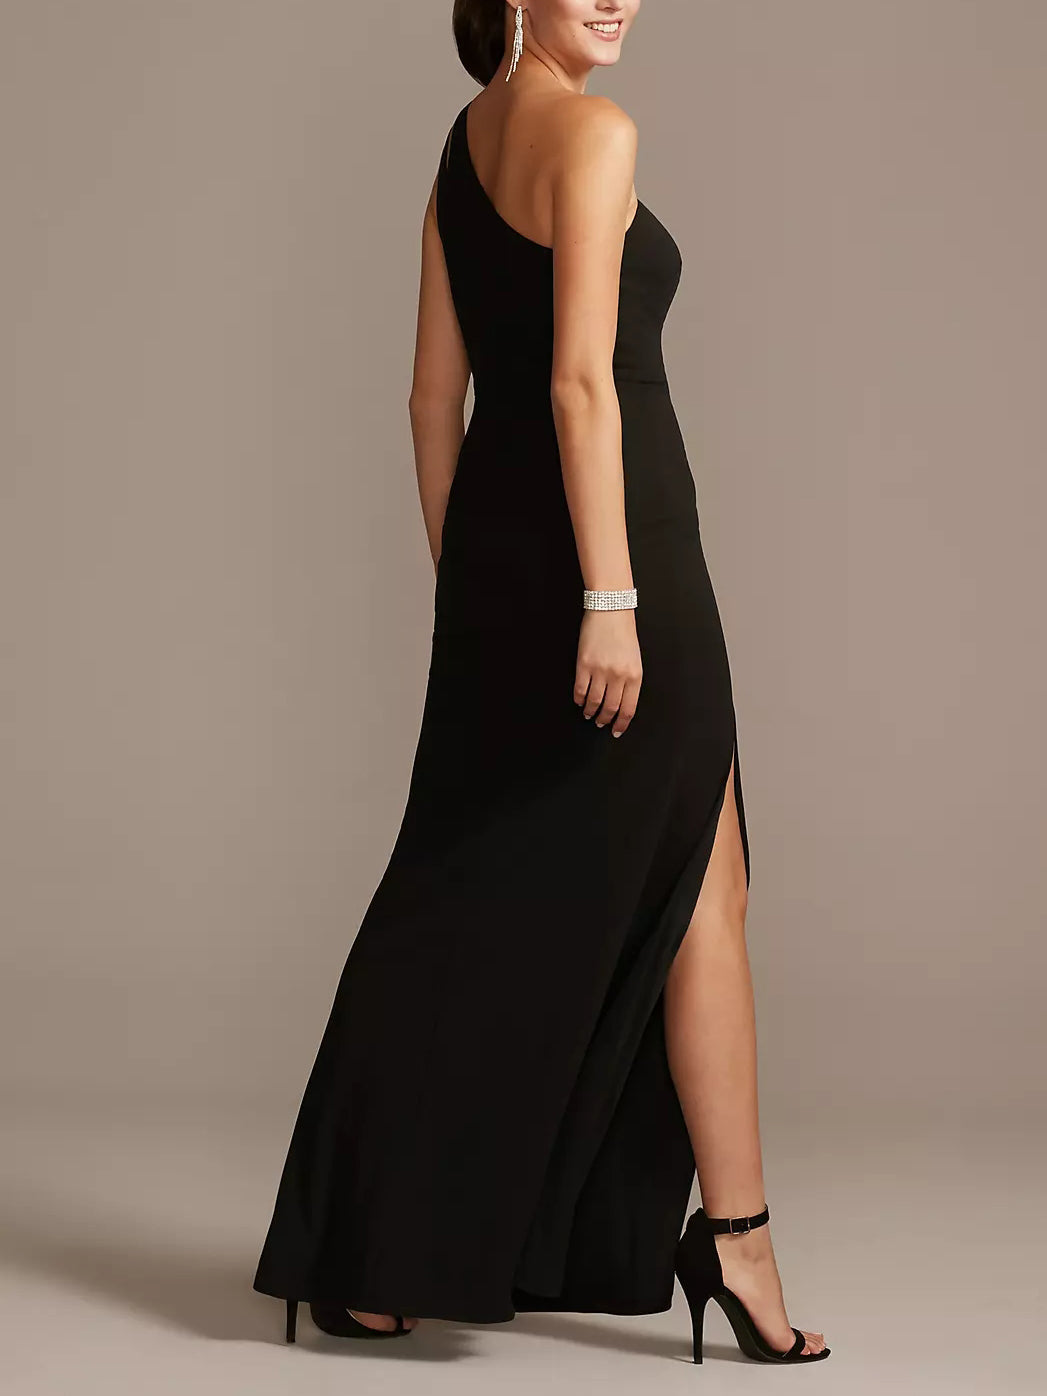 Polyester Spandex Column One Shoulder Sleeveless Dress-GD102050